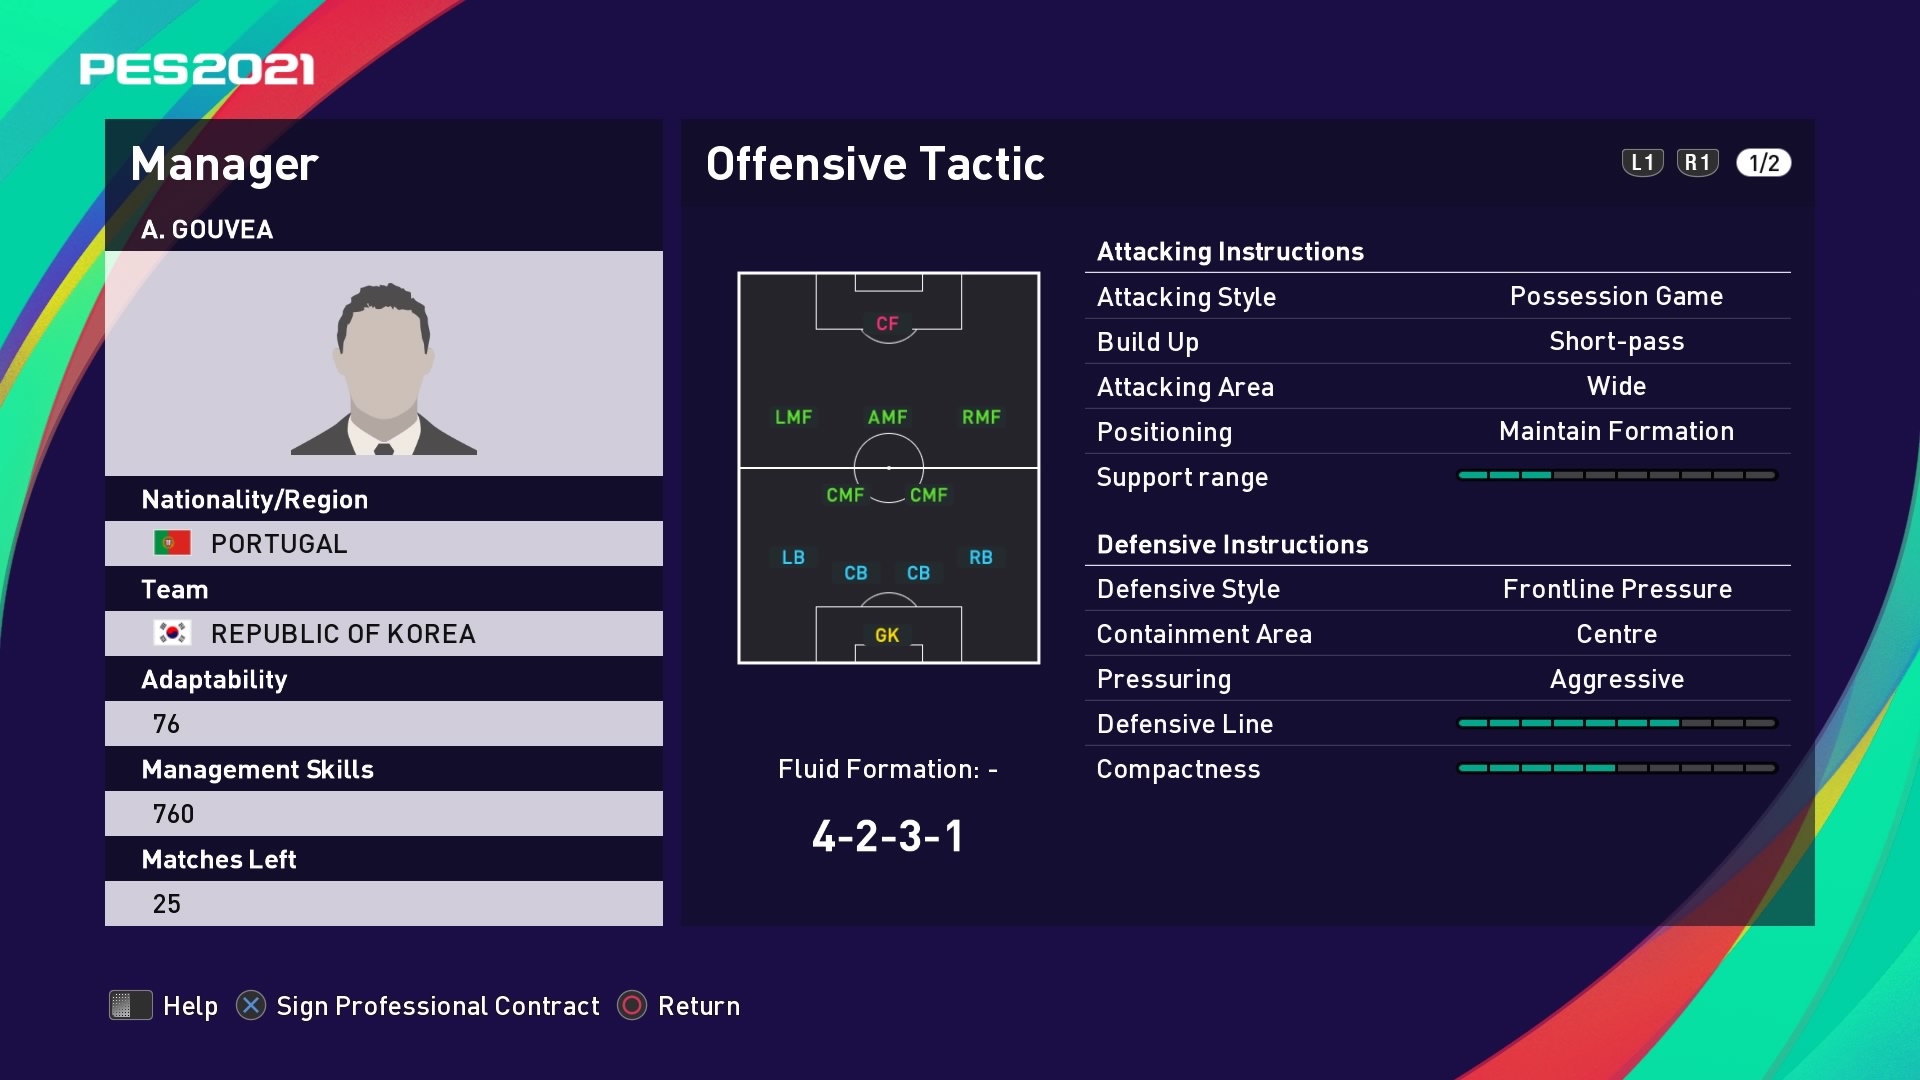 A. Gouvea (Paulo Bento) Offensive Tactic in PES 2021 myClub